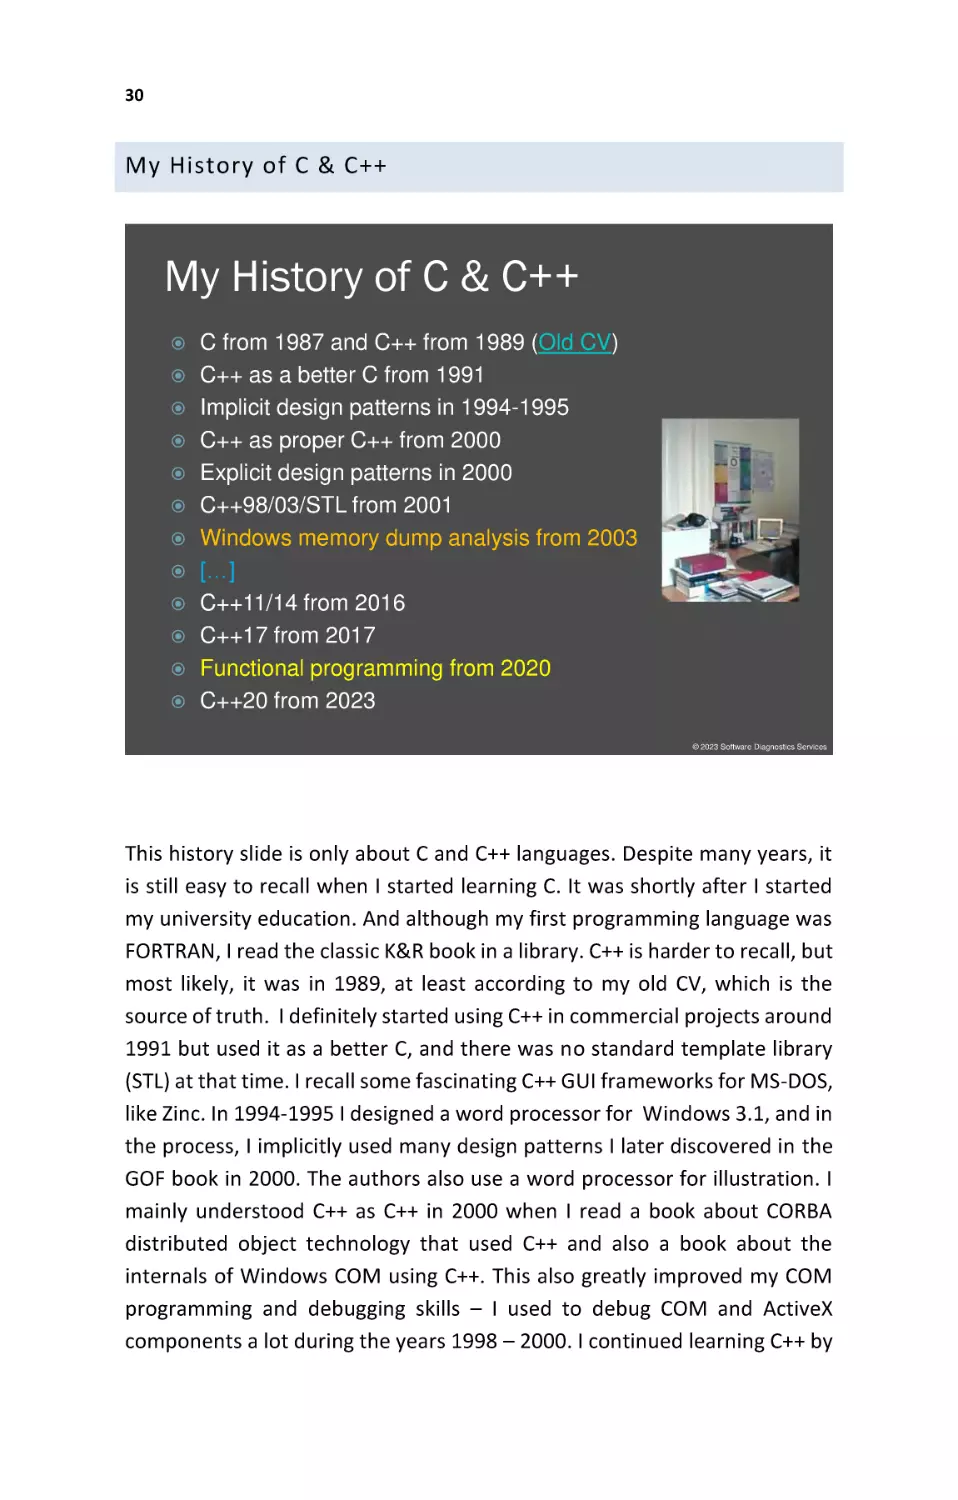 My History of C & C++